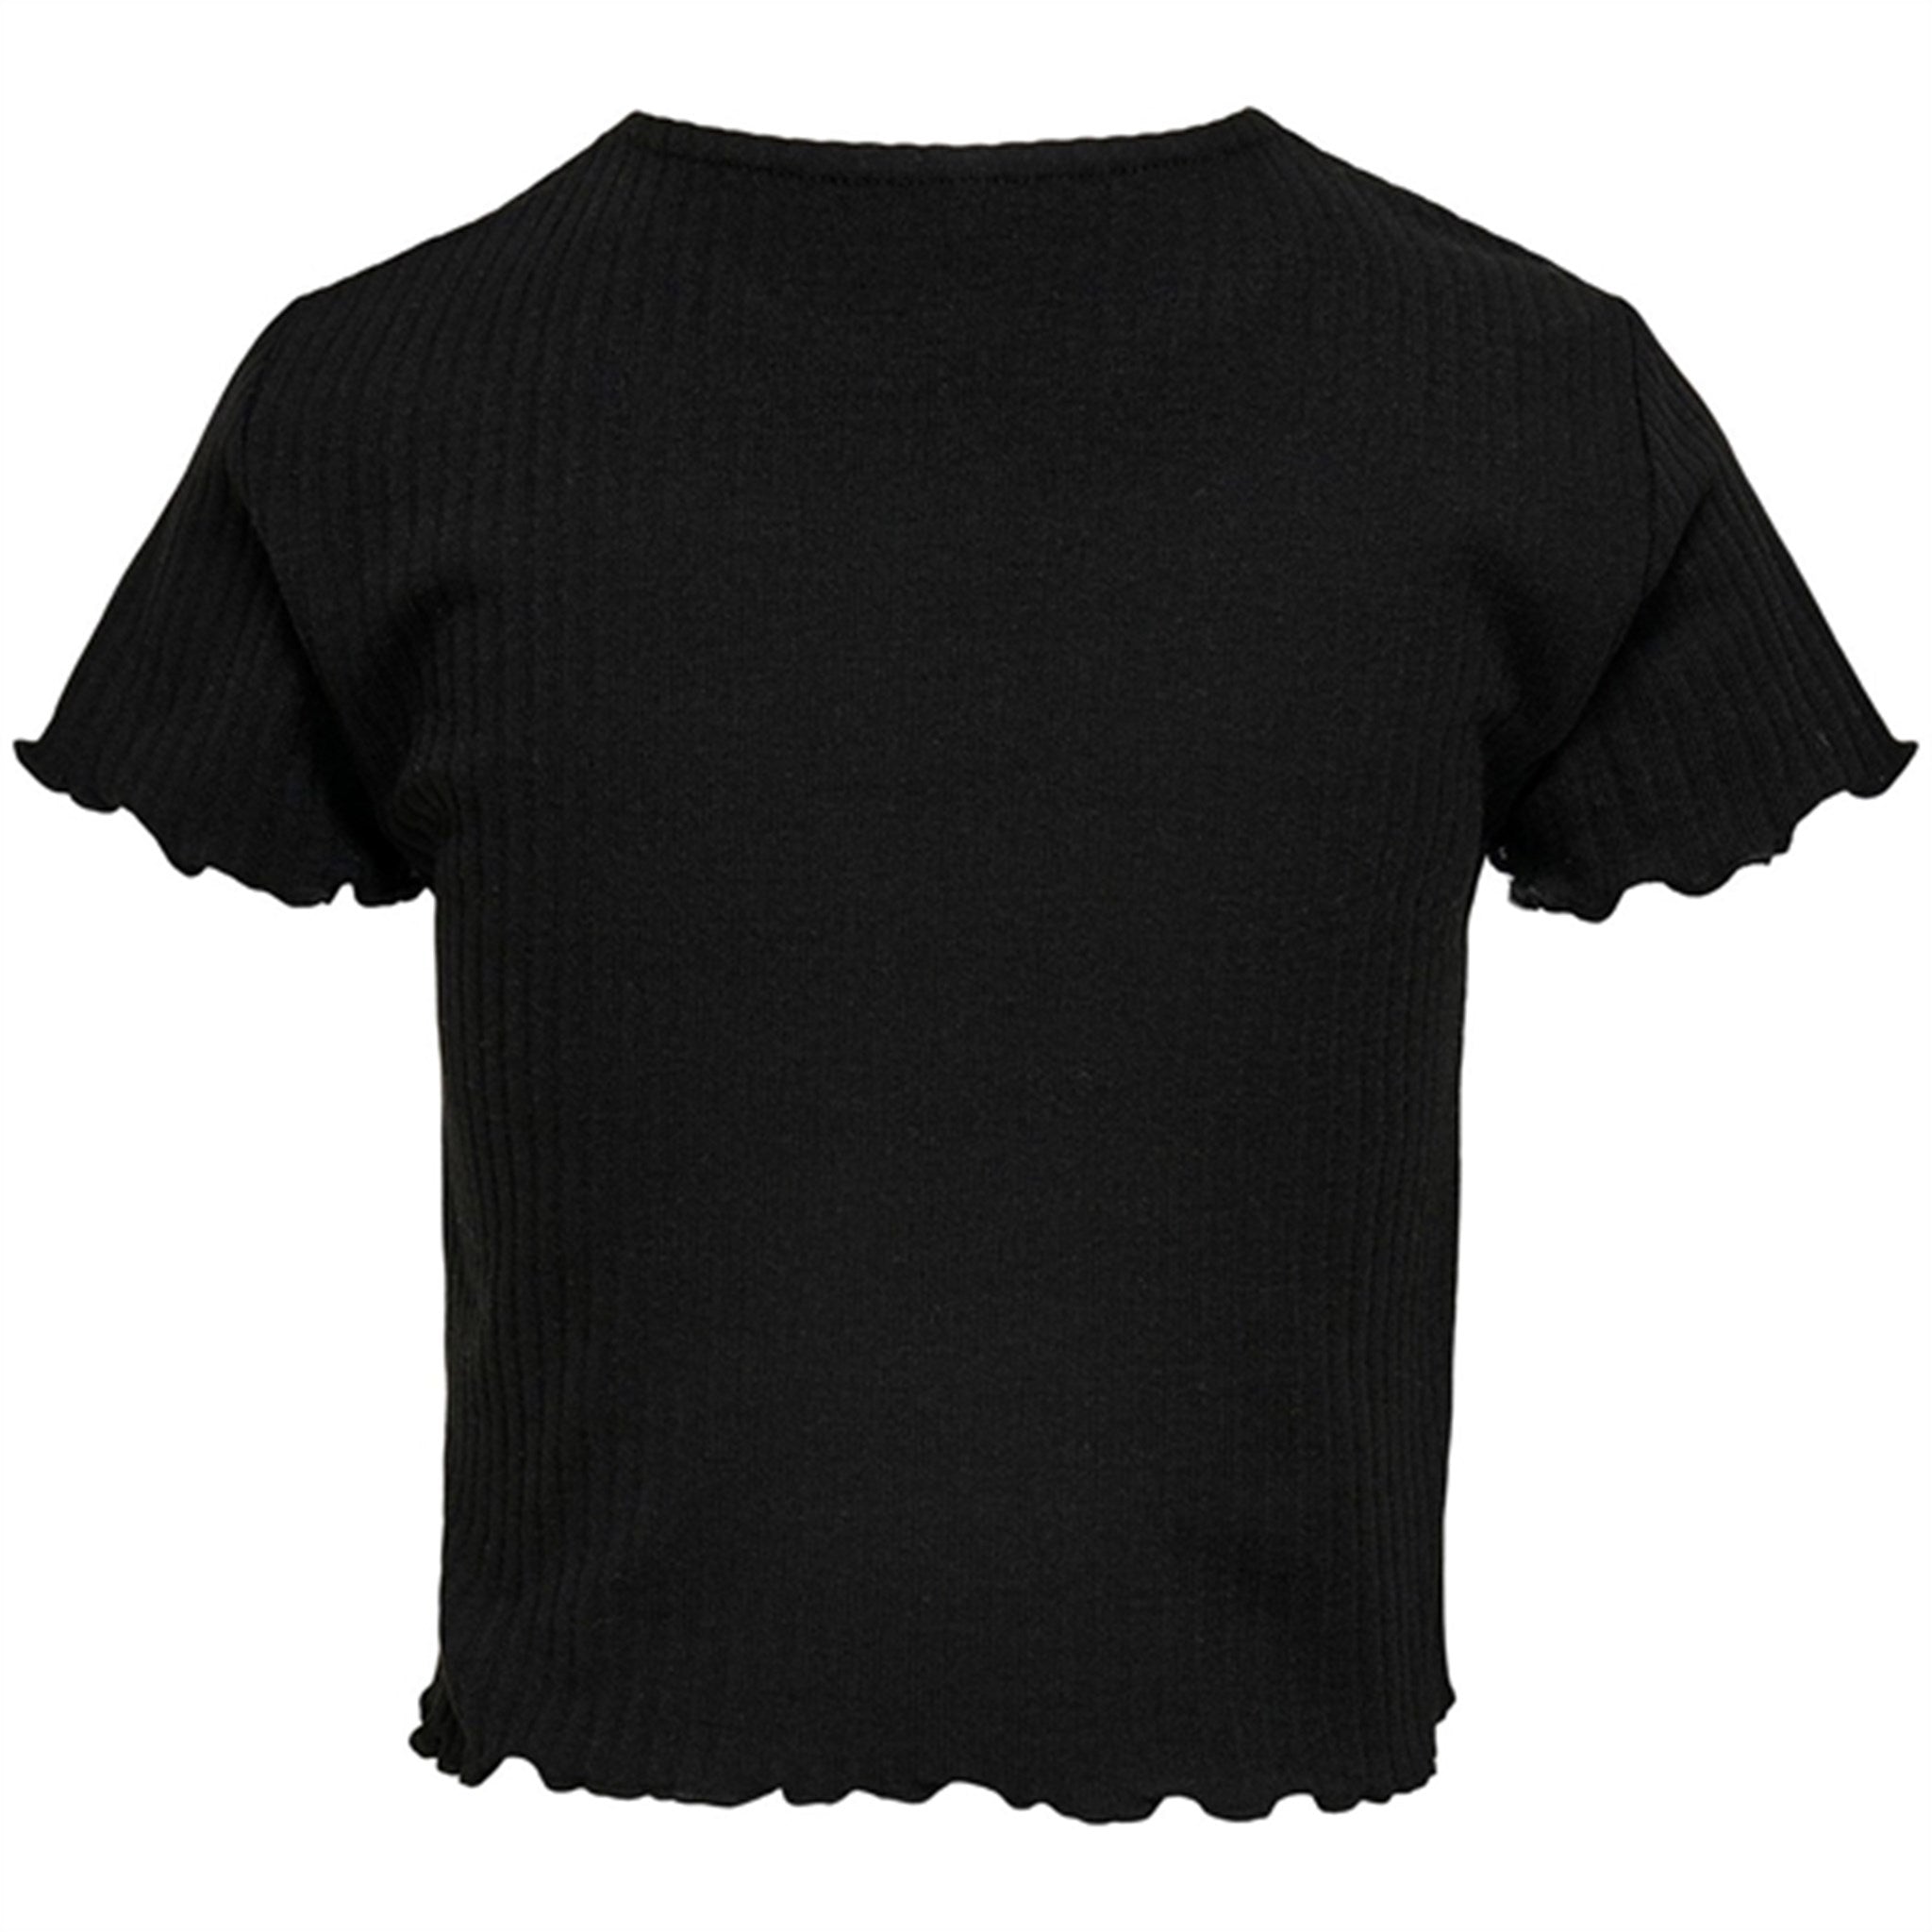 Black Frill Shirt Woxer - kids ONLY →